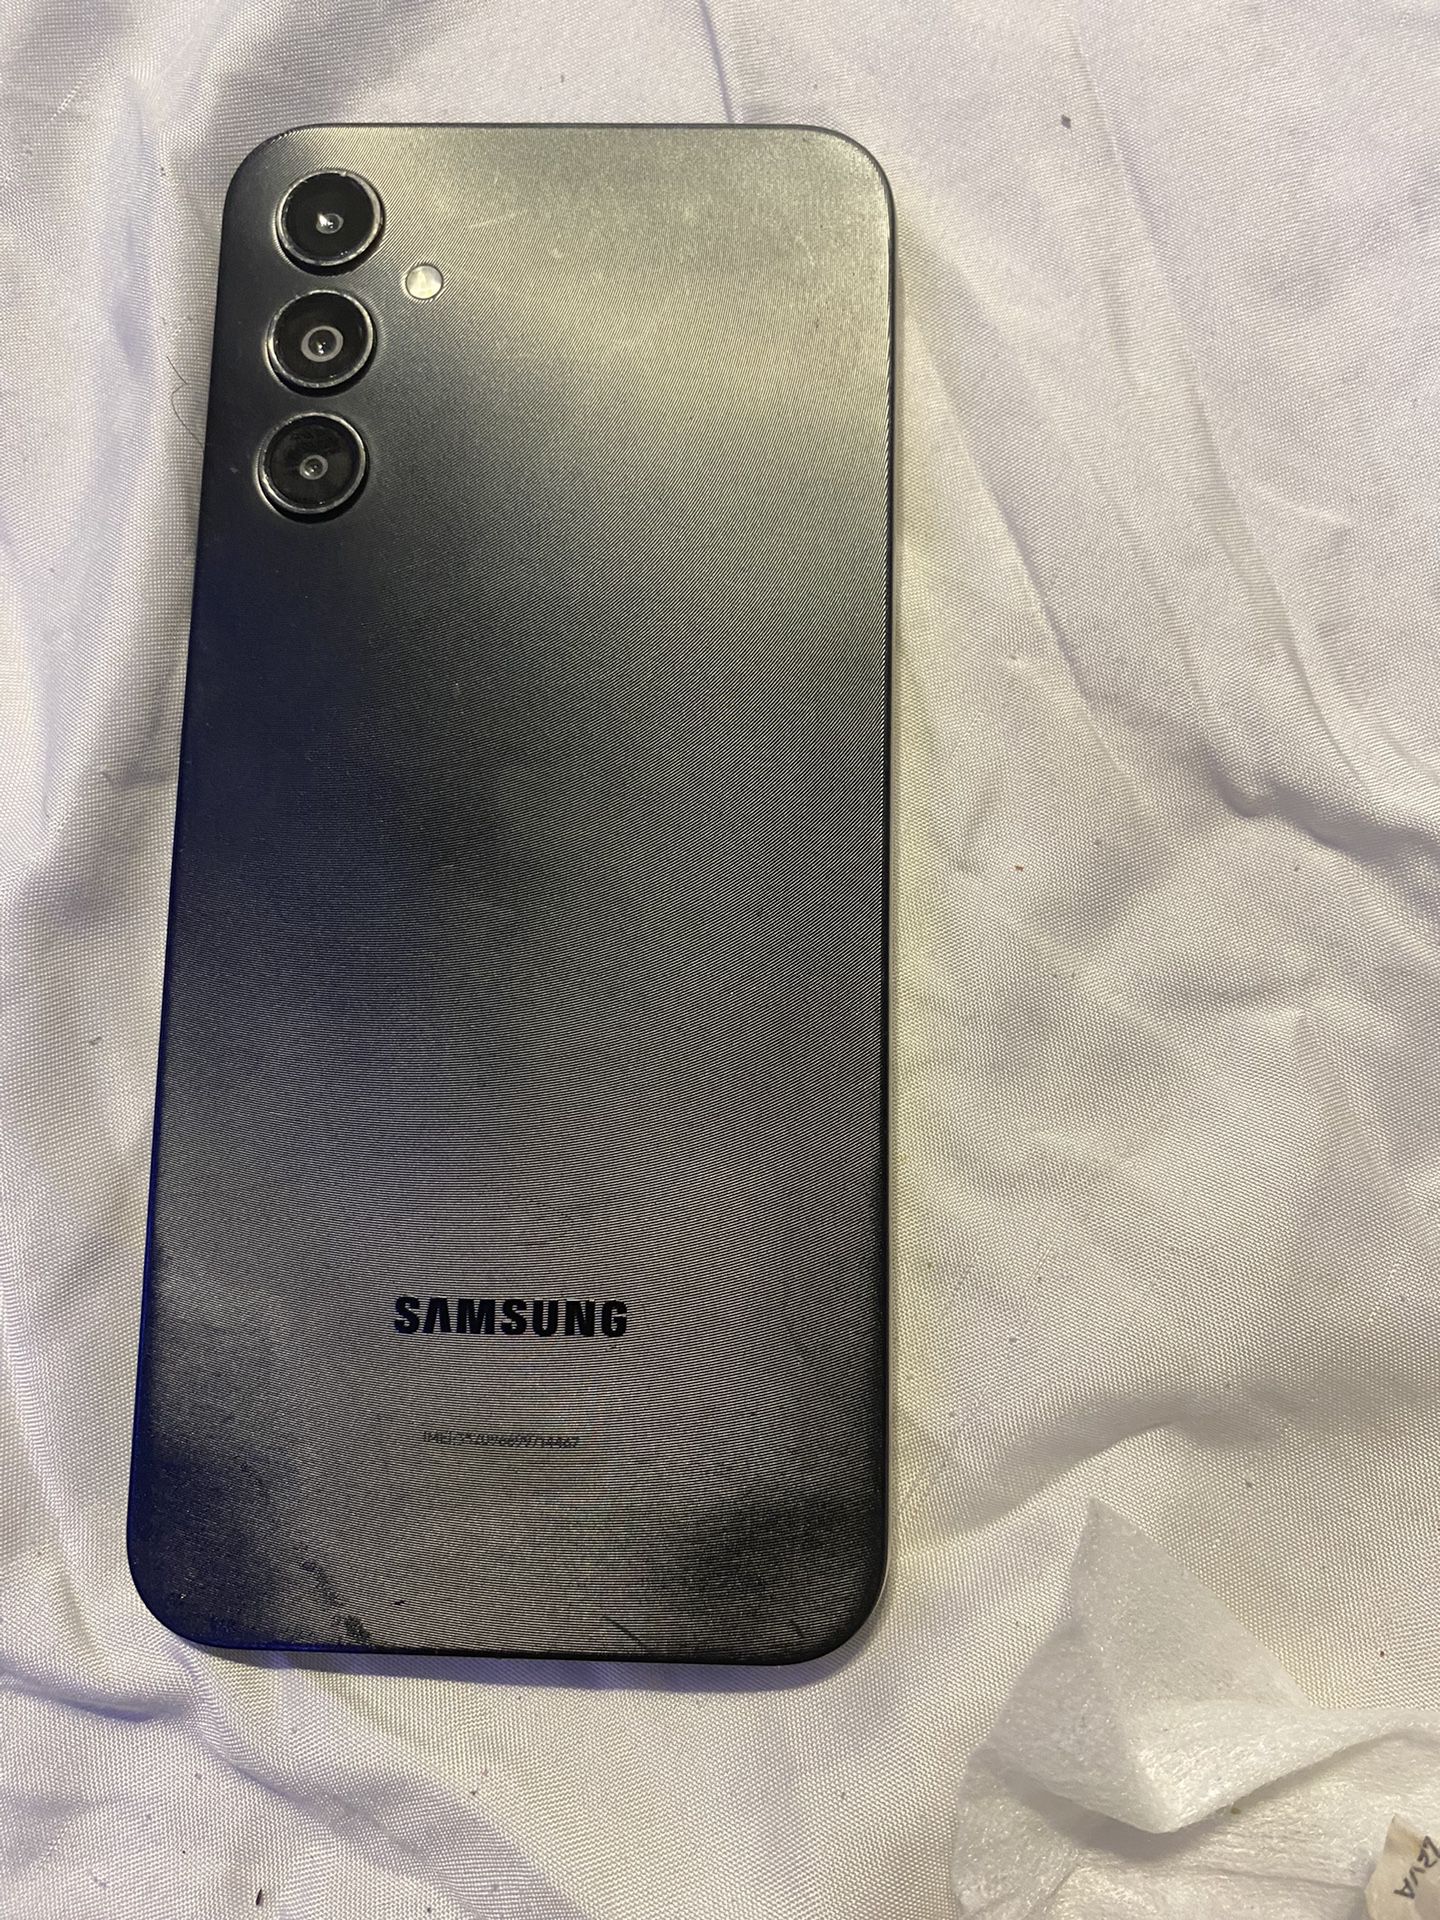 Samsung Phone